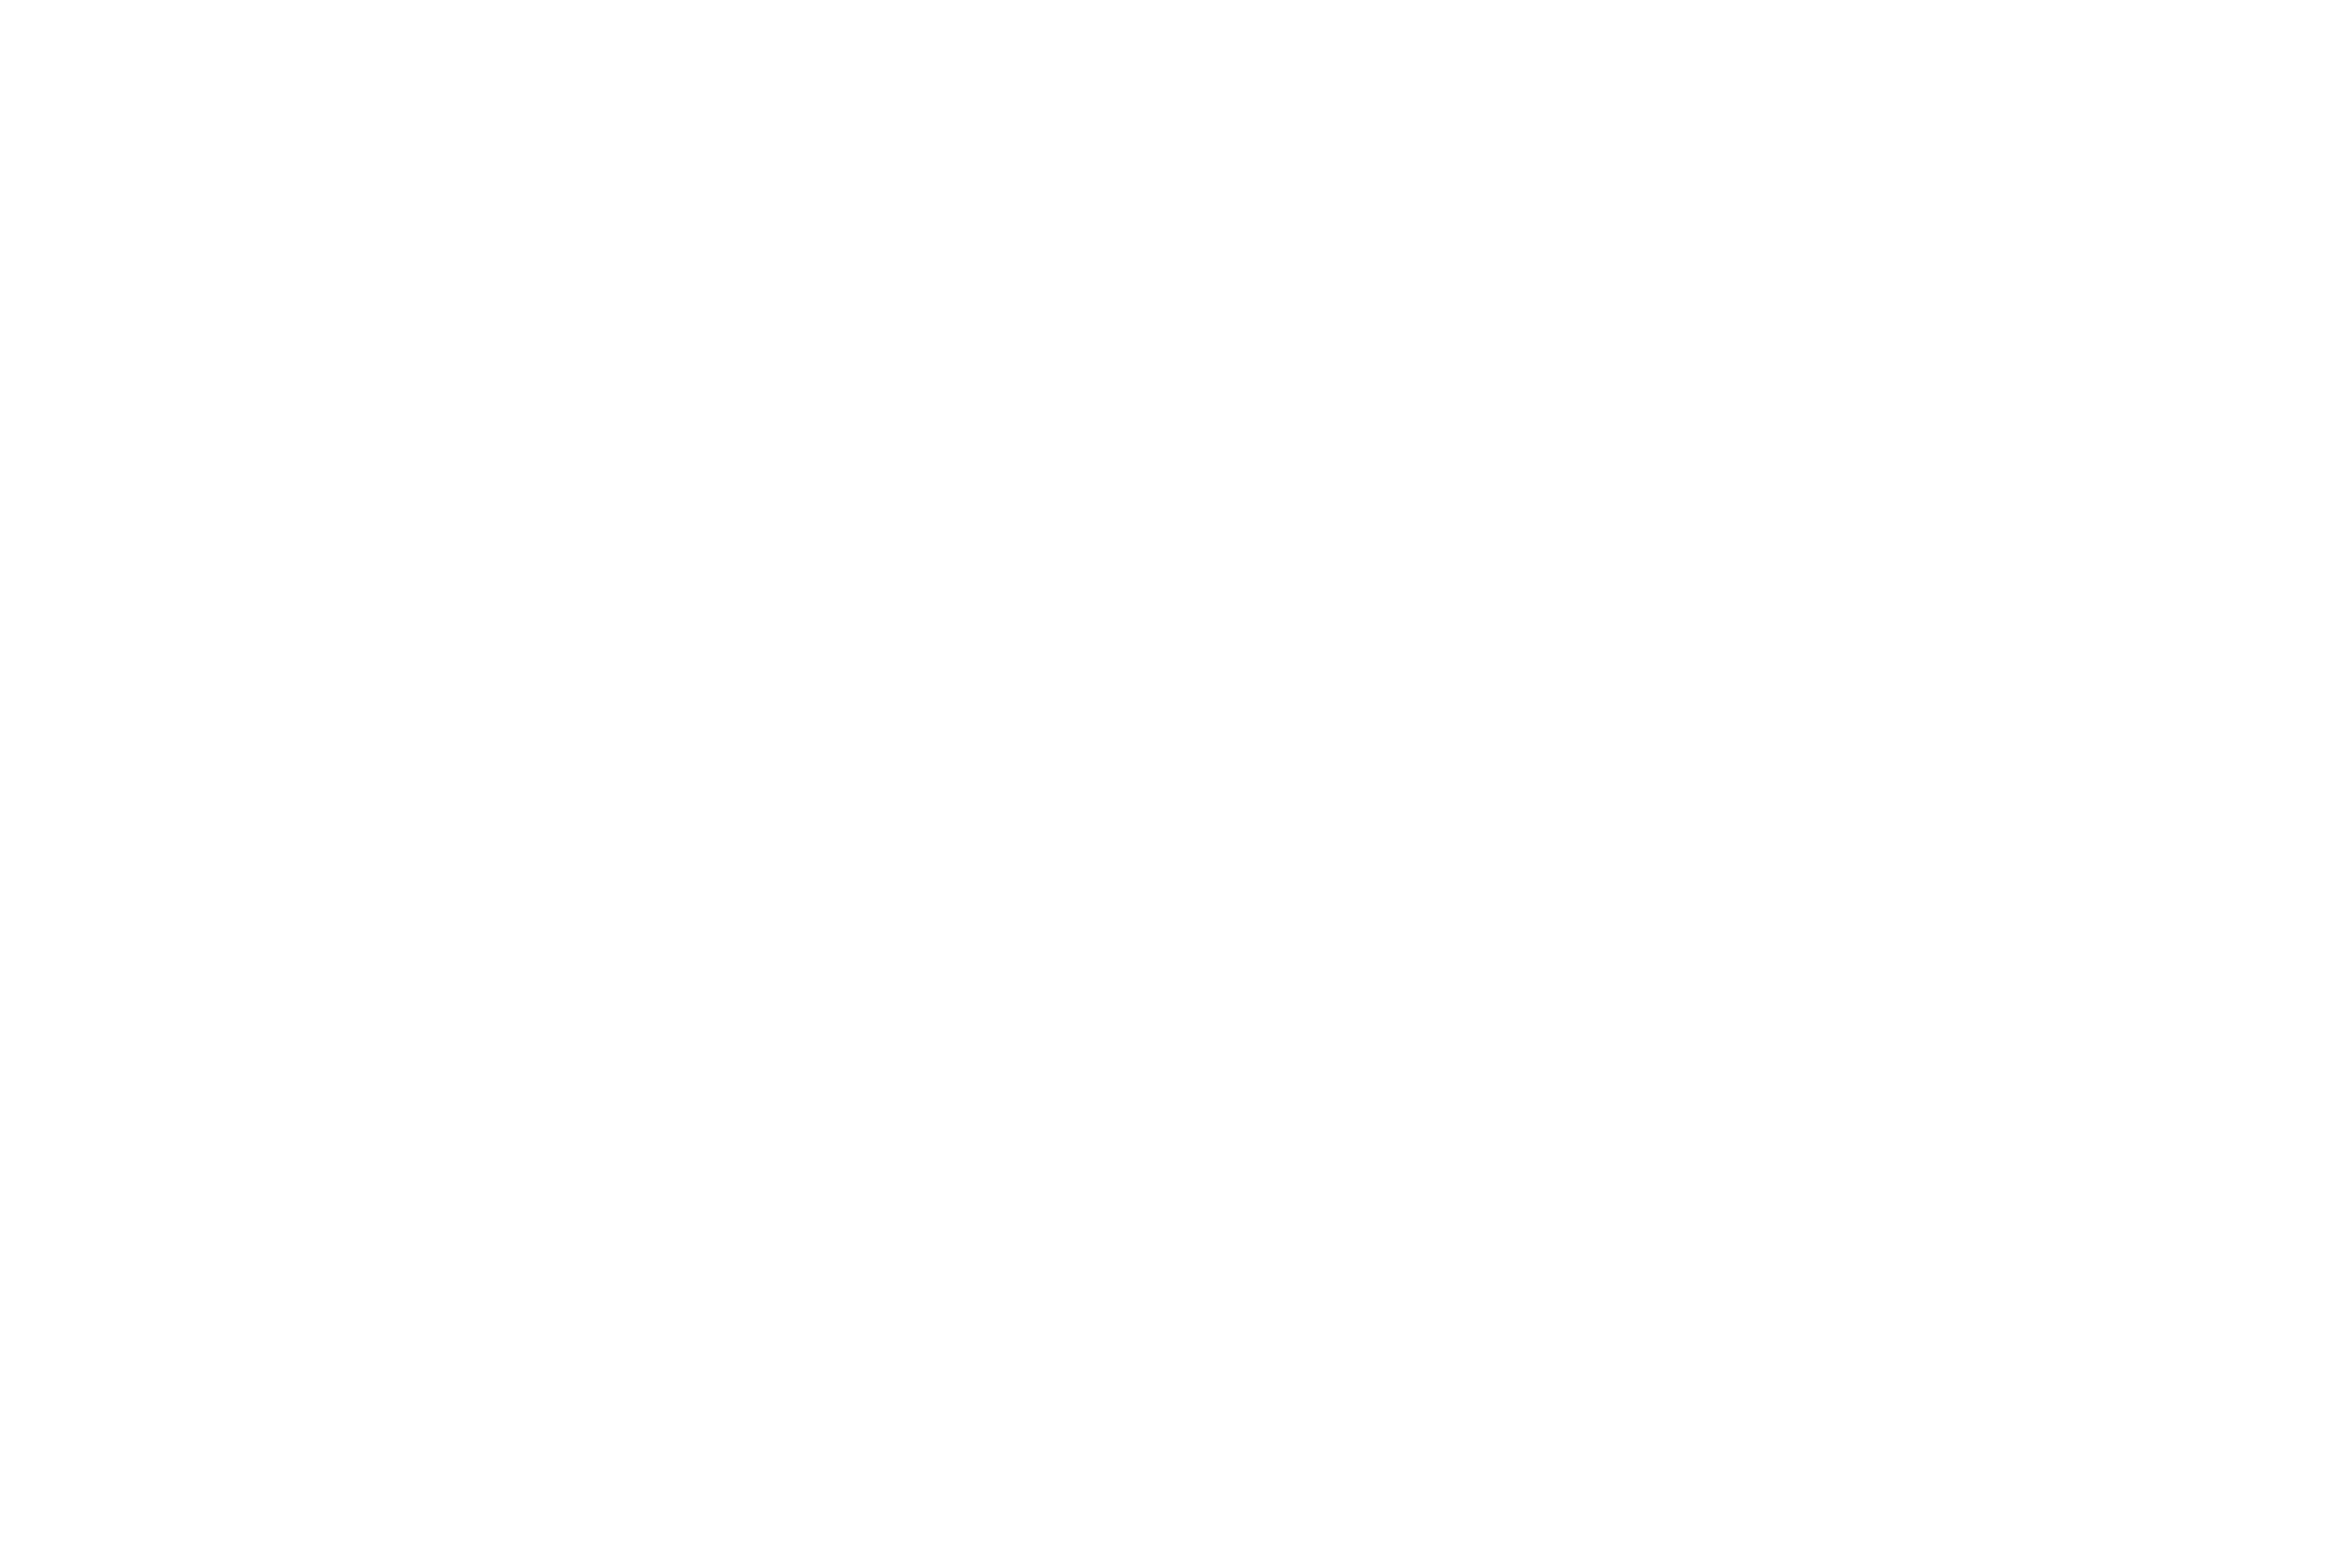 Patrick Atlas - Photographies